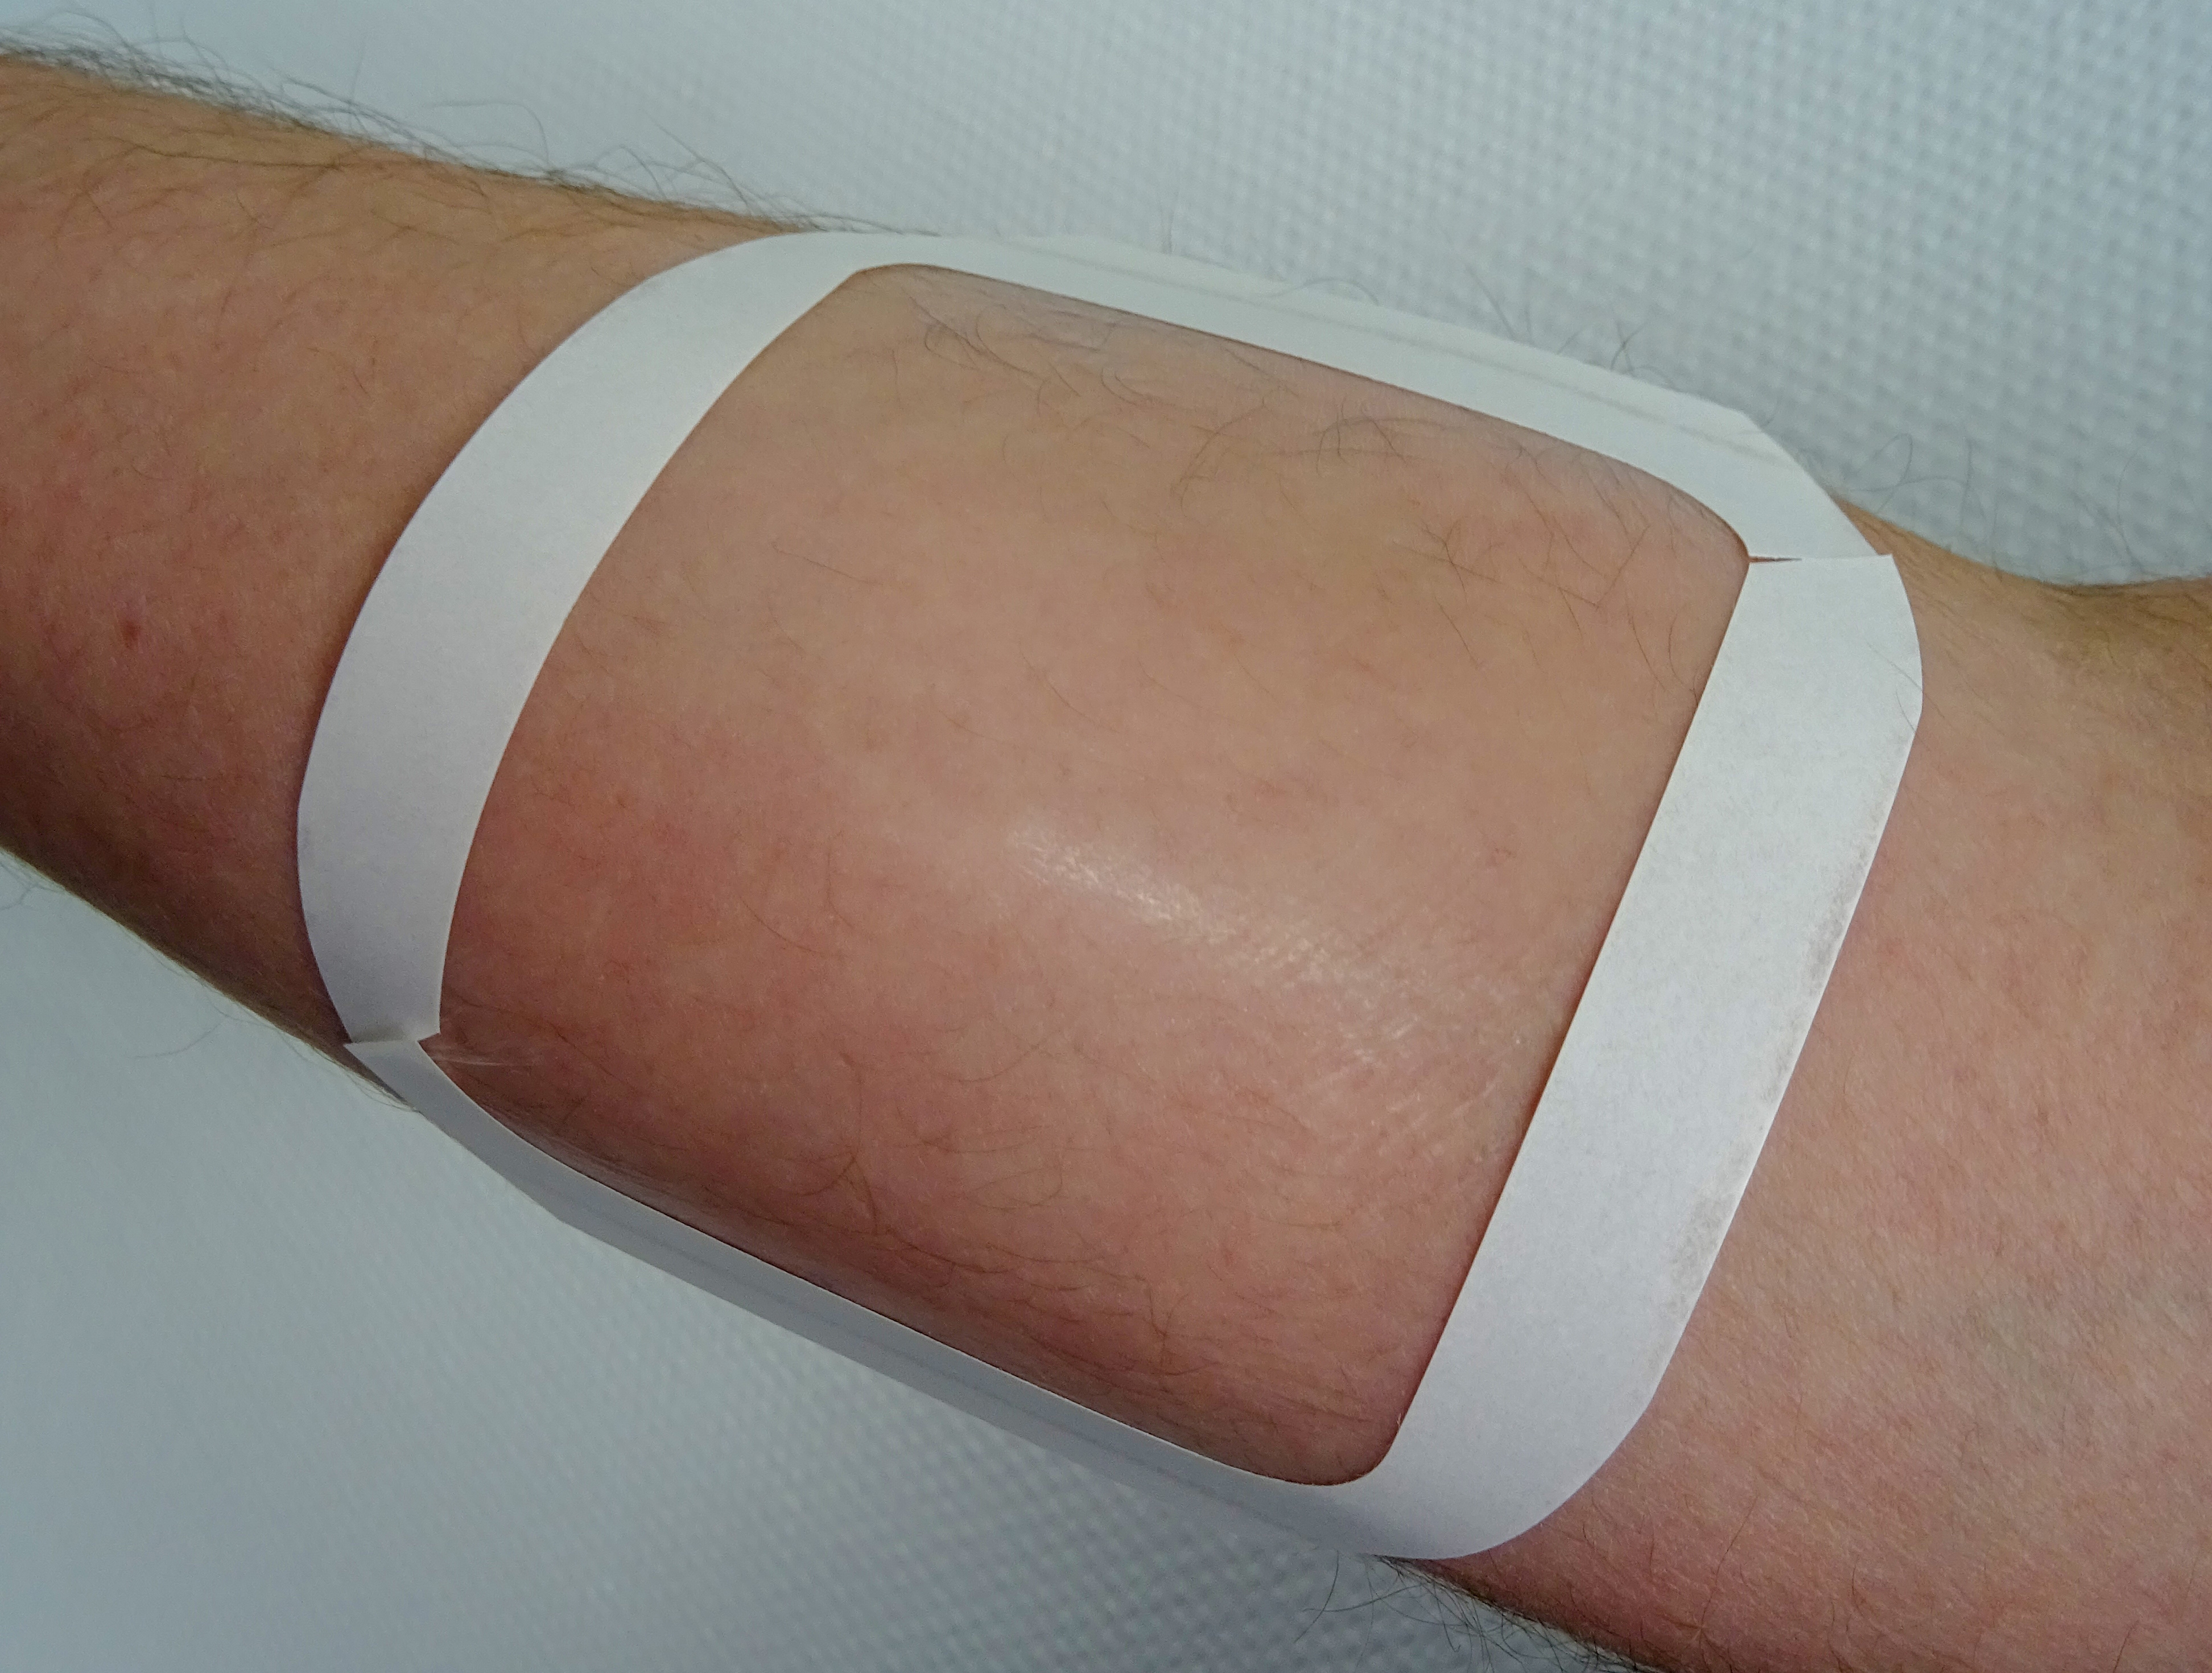 <ul><li>硅凝胶单面聚氨酯膜</li><li>设计用于保护插入点以及周边和敏感皮肤 </li><li>可以用硅胶去除，移除时没有疼痛或创伤</li></ul>